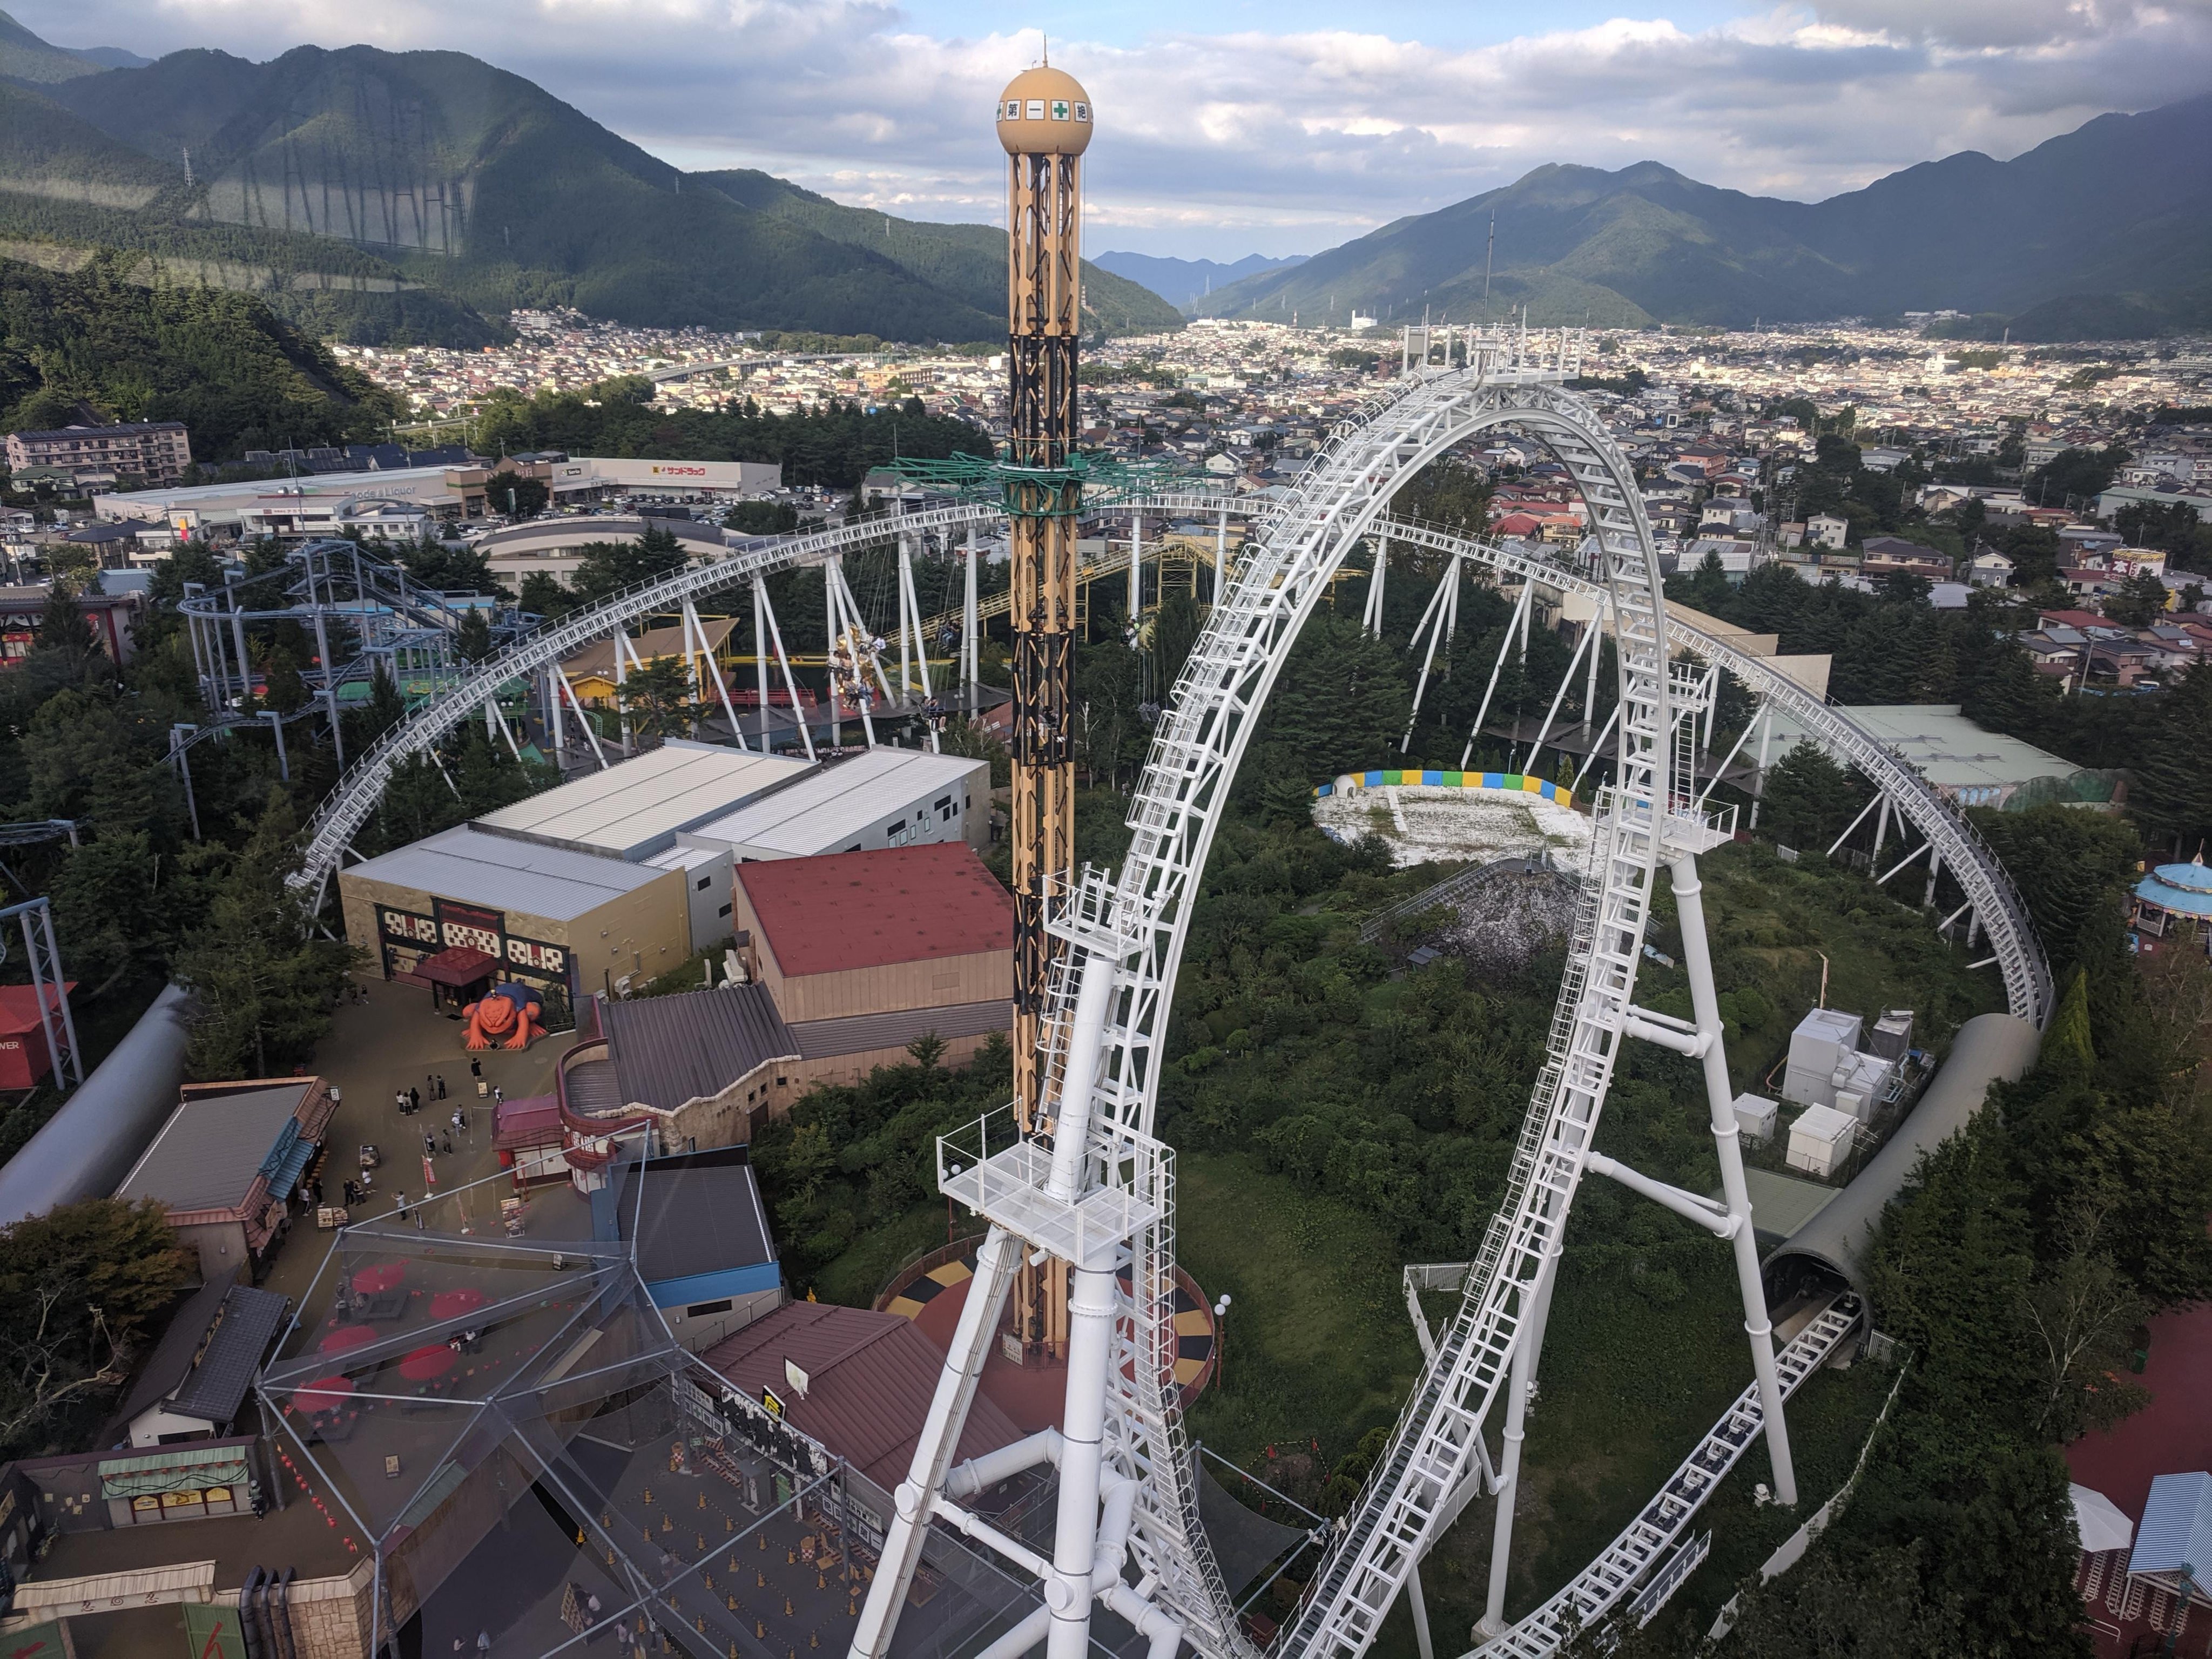 The Do-Dodonpa steel roller coaster at Fuji-Q Highland in Fujiyoshida, Yamanashi, Japan. Photo: Handout